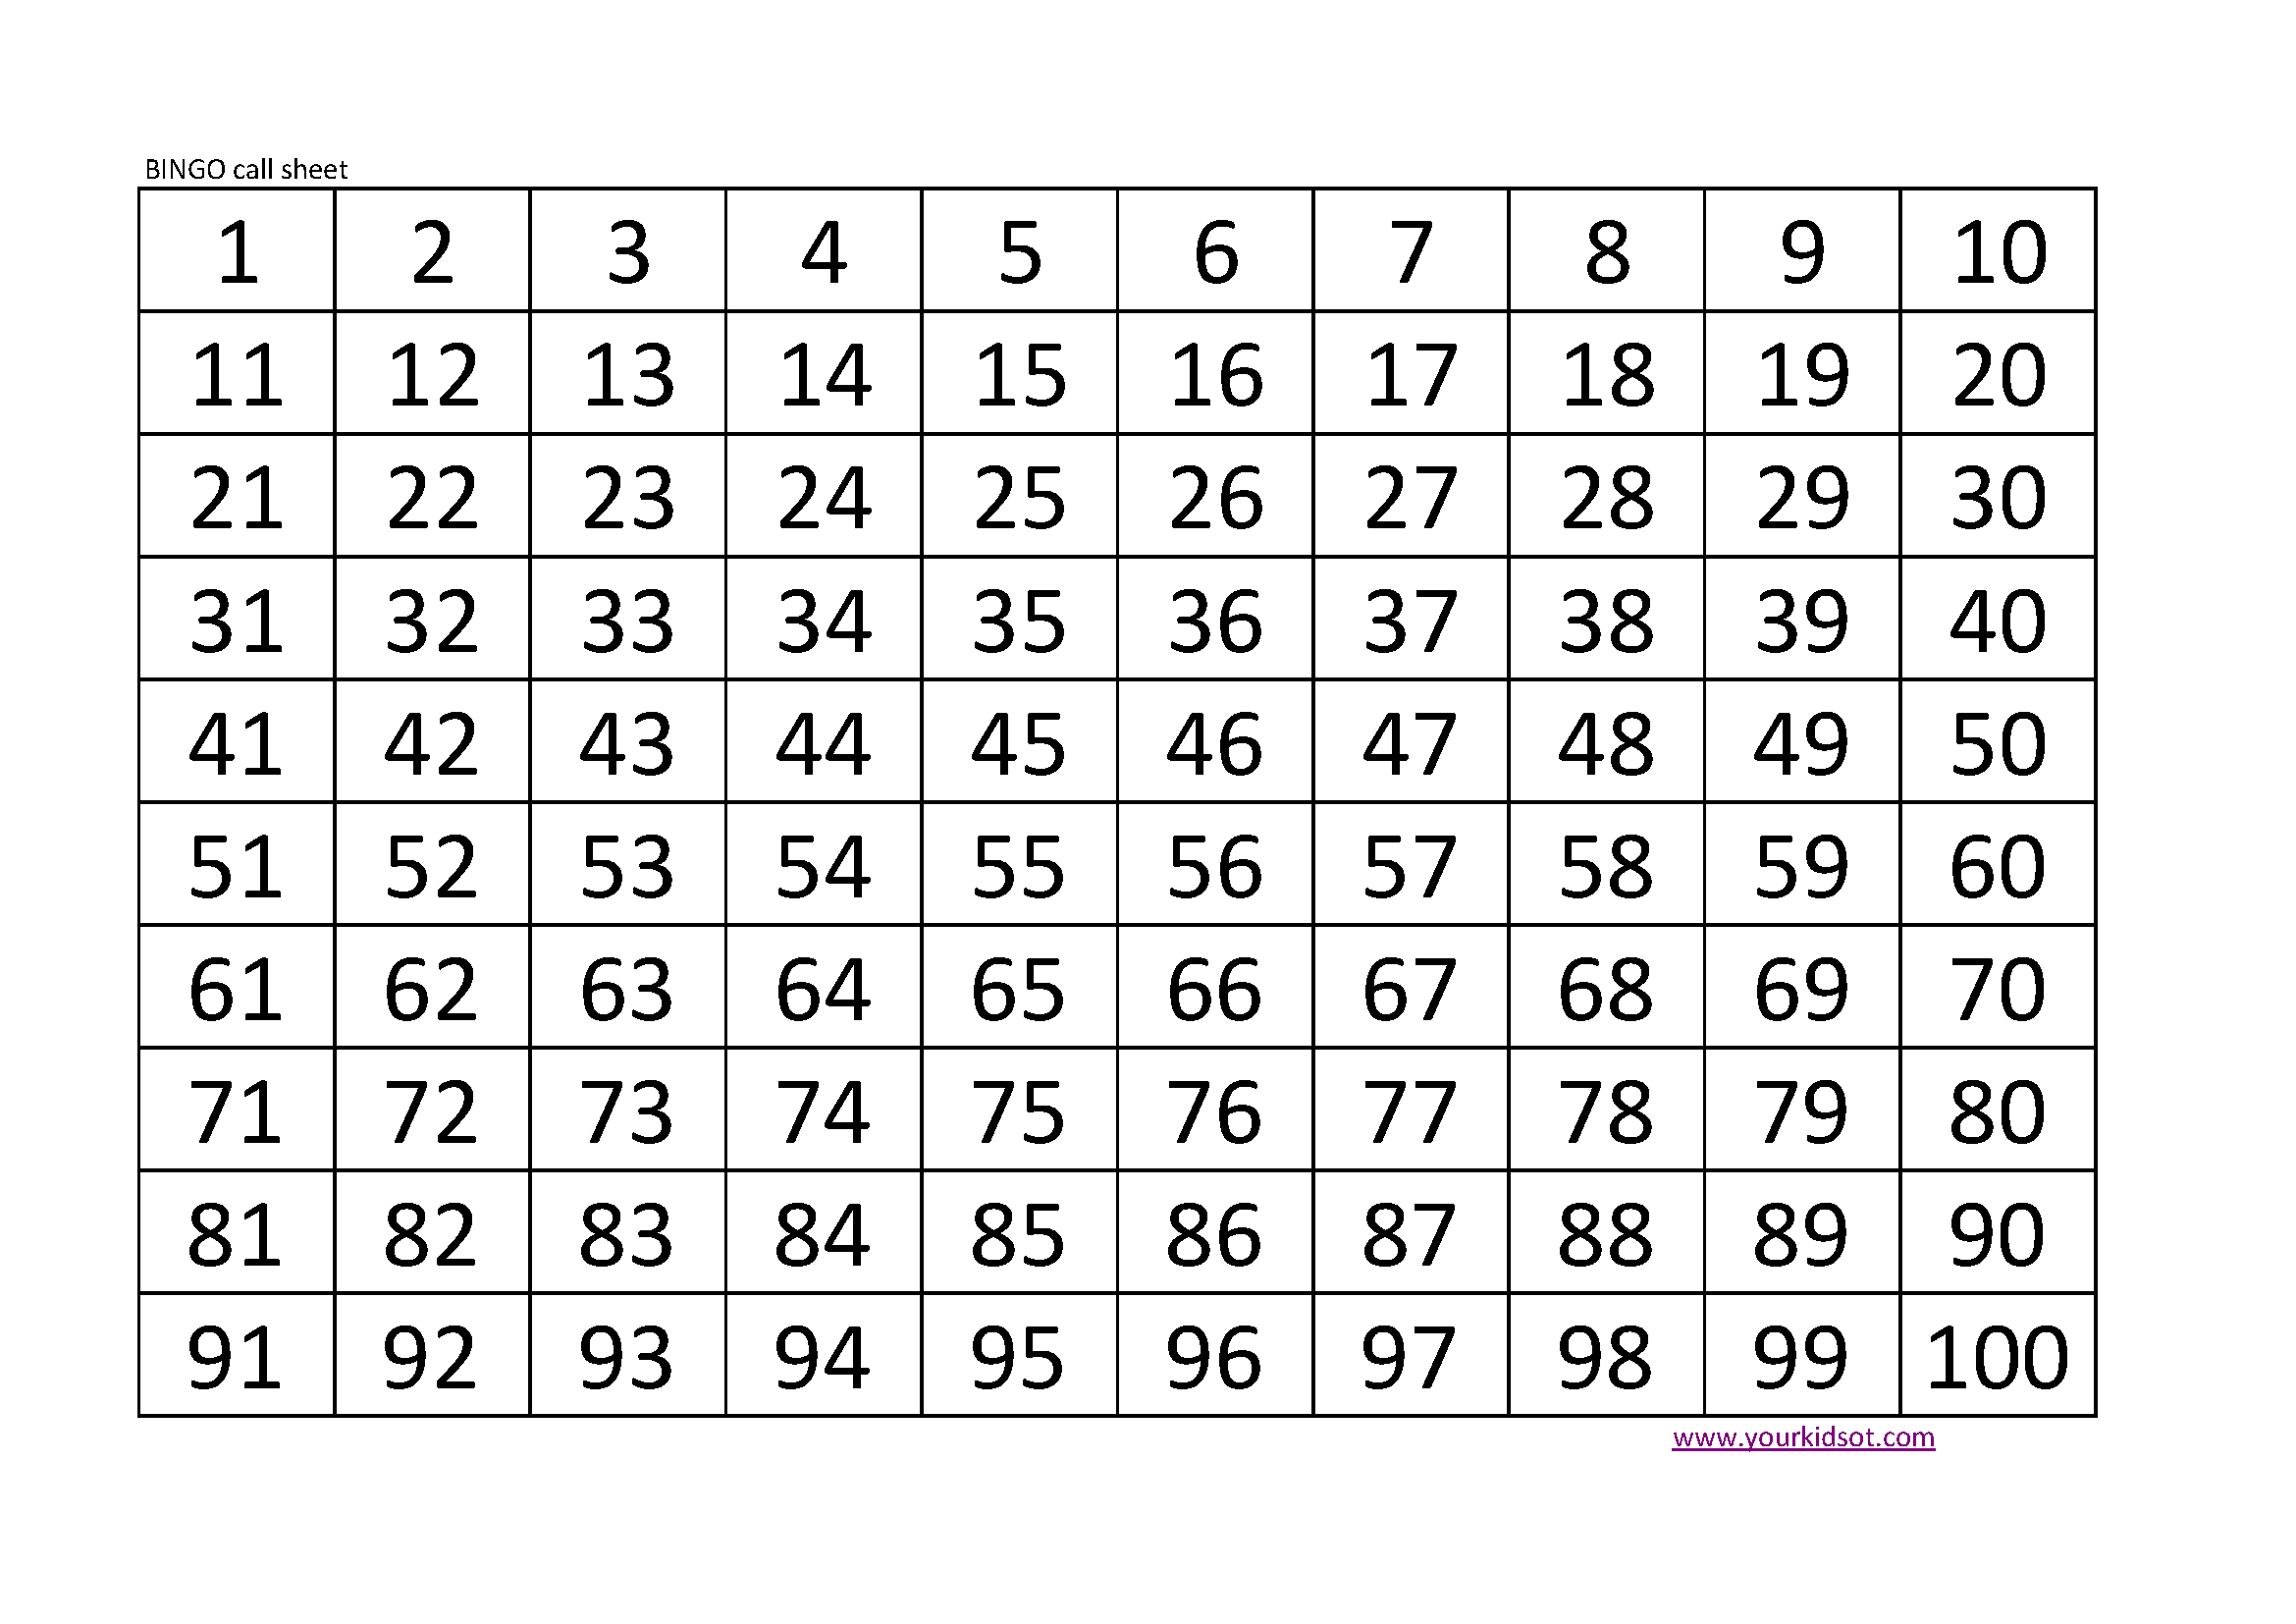 bingo-calling-sheet-printable